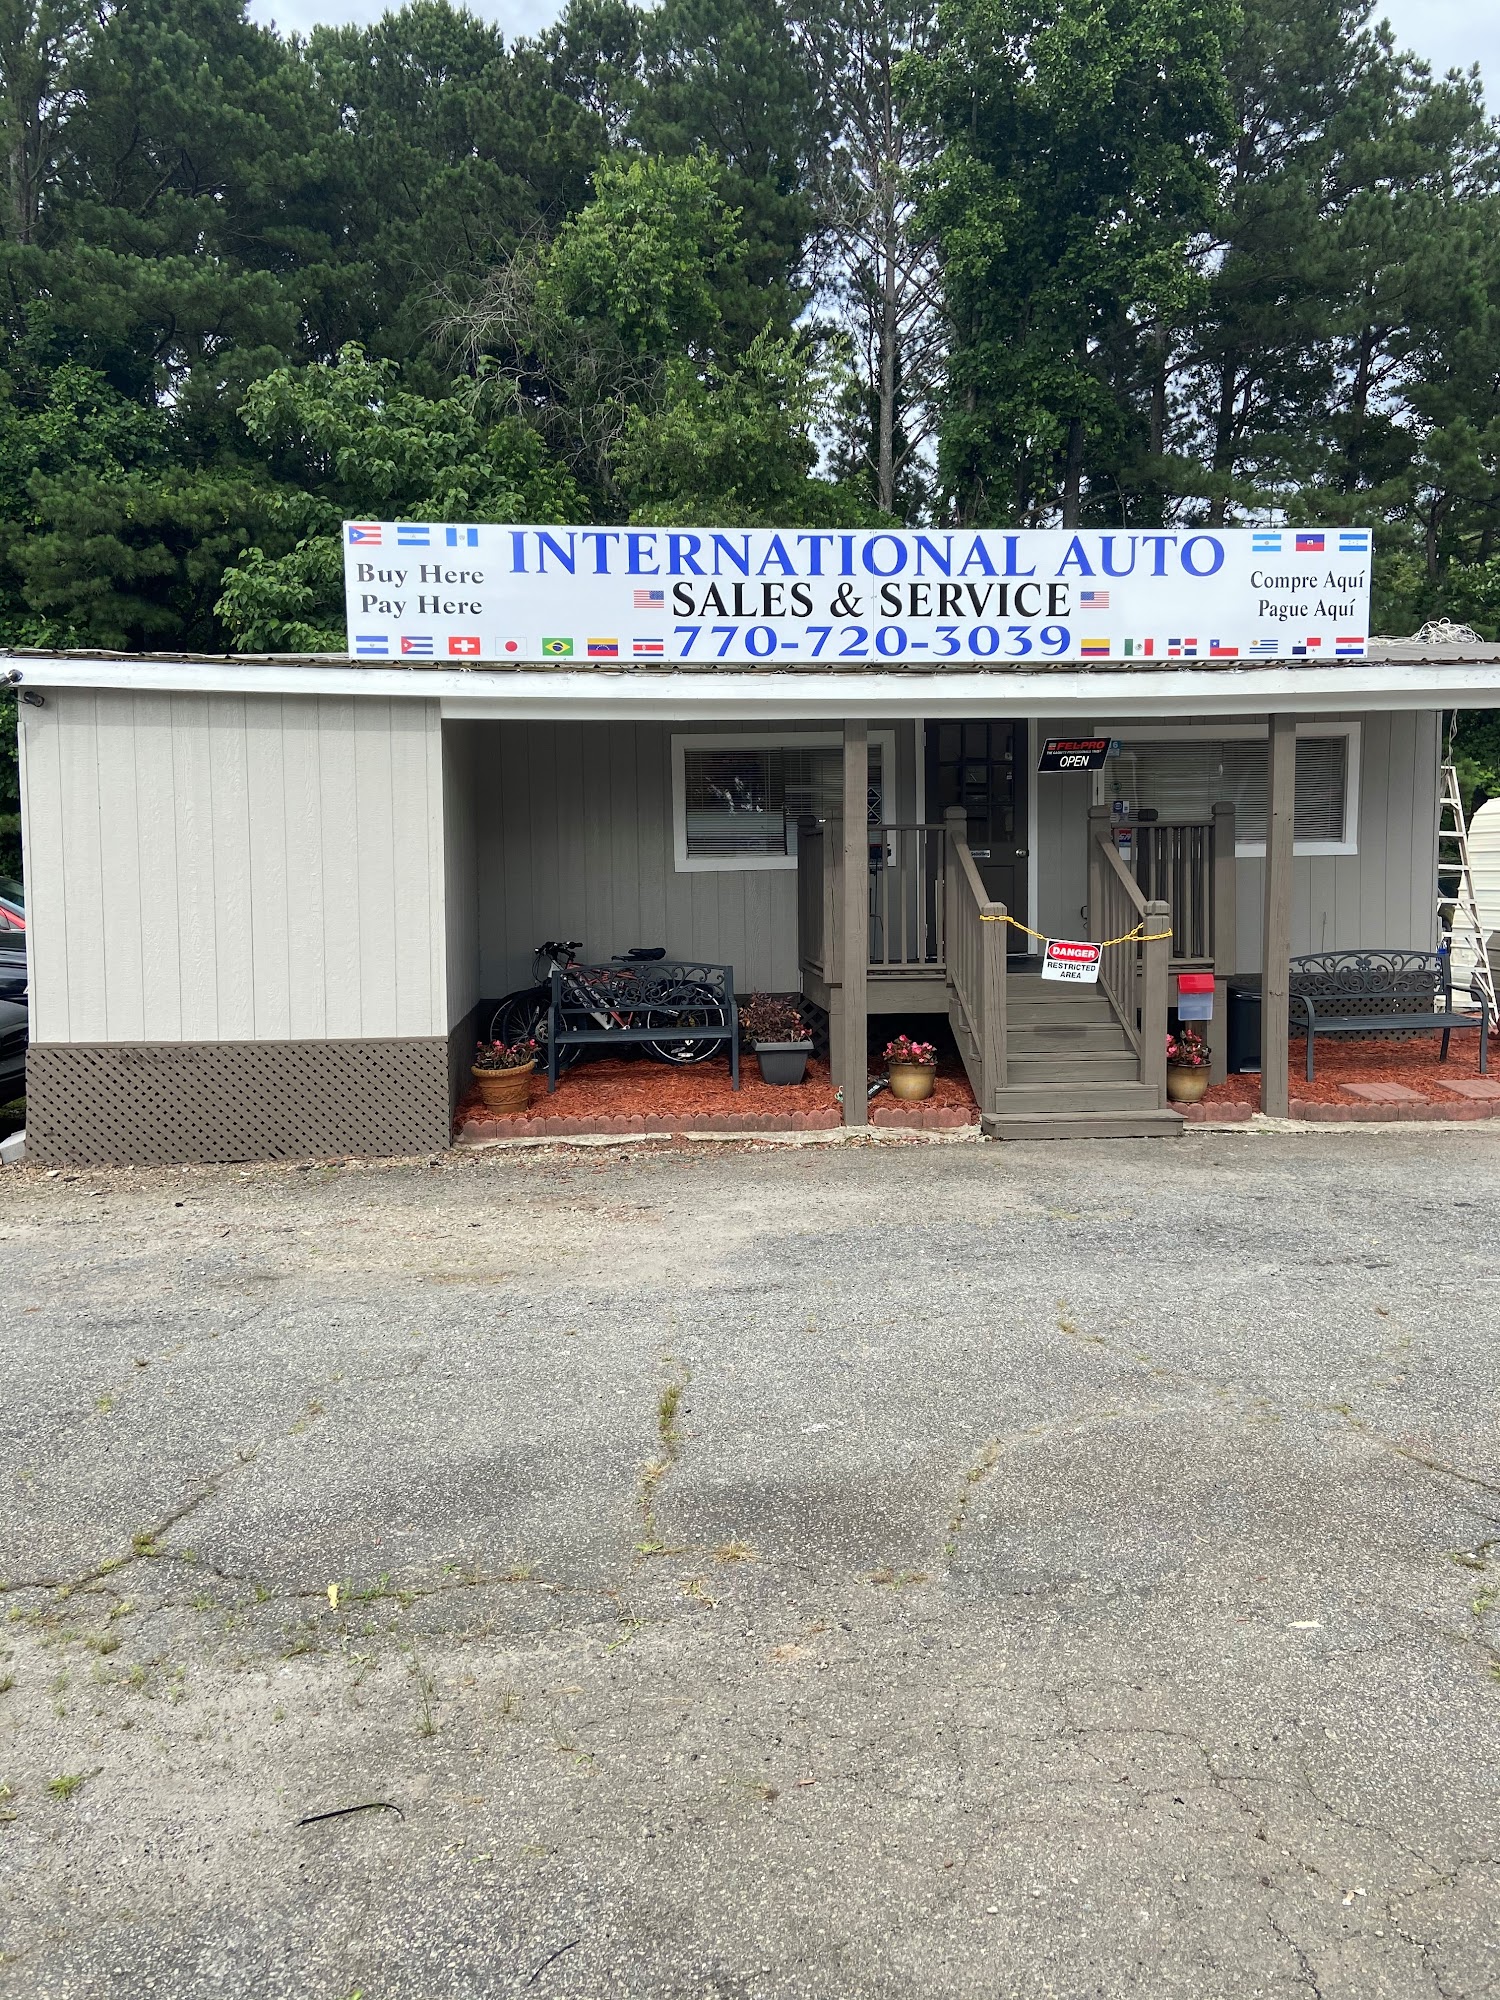 International Auto Sales and Service